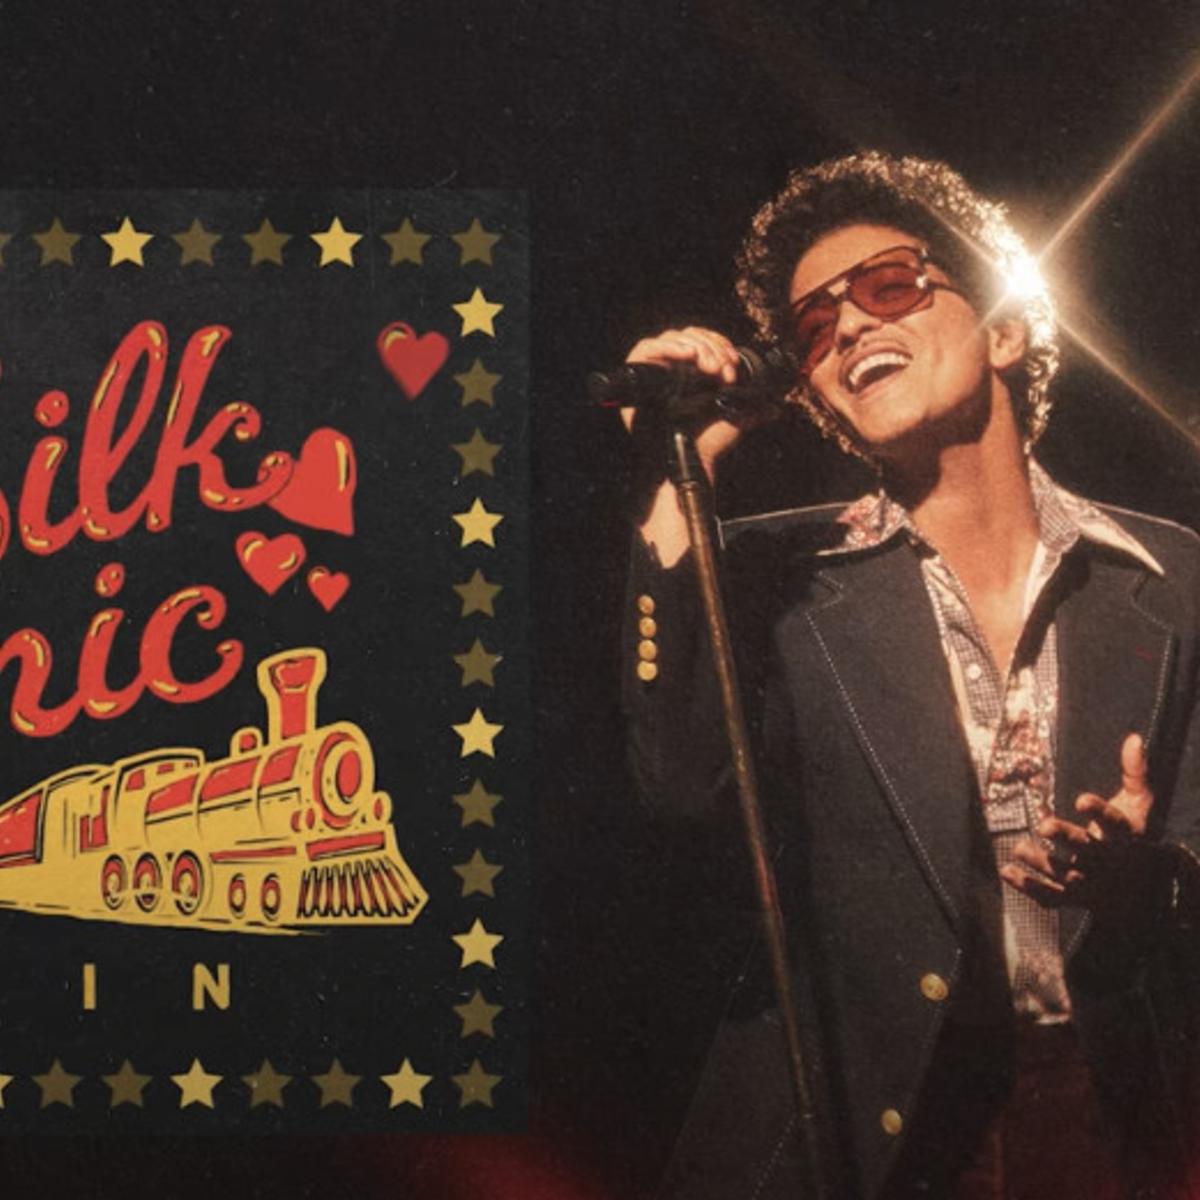 Silk Sonic celebra Valentine's Day com cover de hit romântico dos anos 80